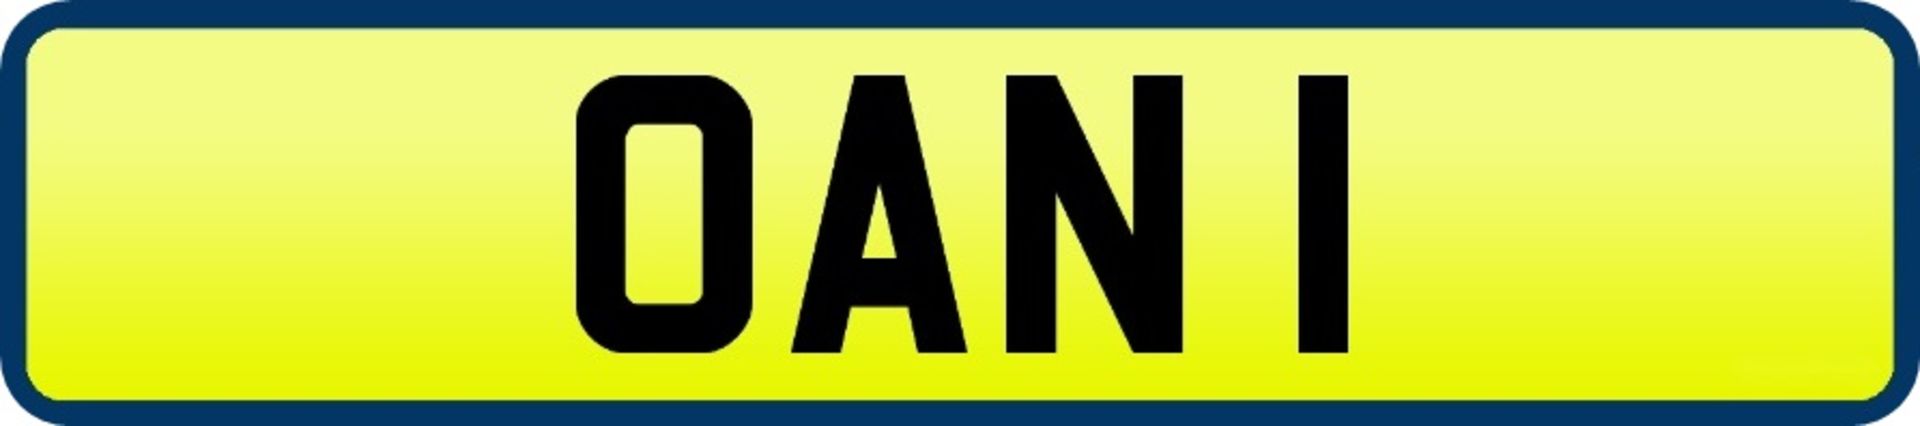 1 x Private Vehicle Registration Car Plate - OAN 1 - CL590 - Location: Altrincham WA14More